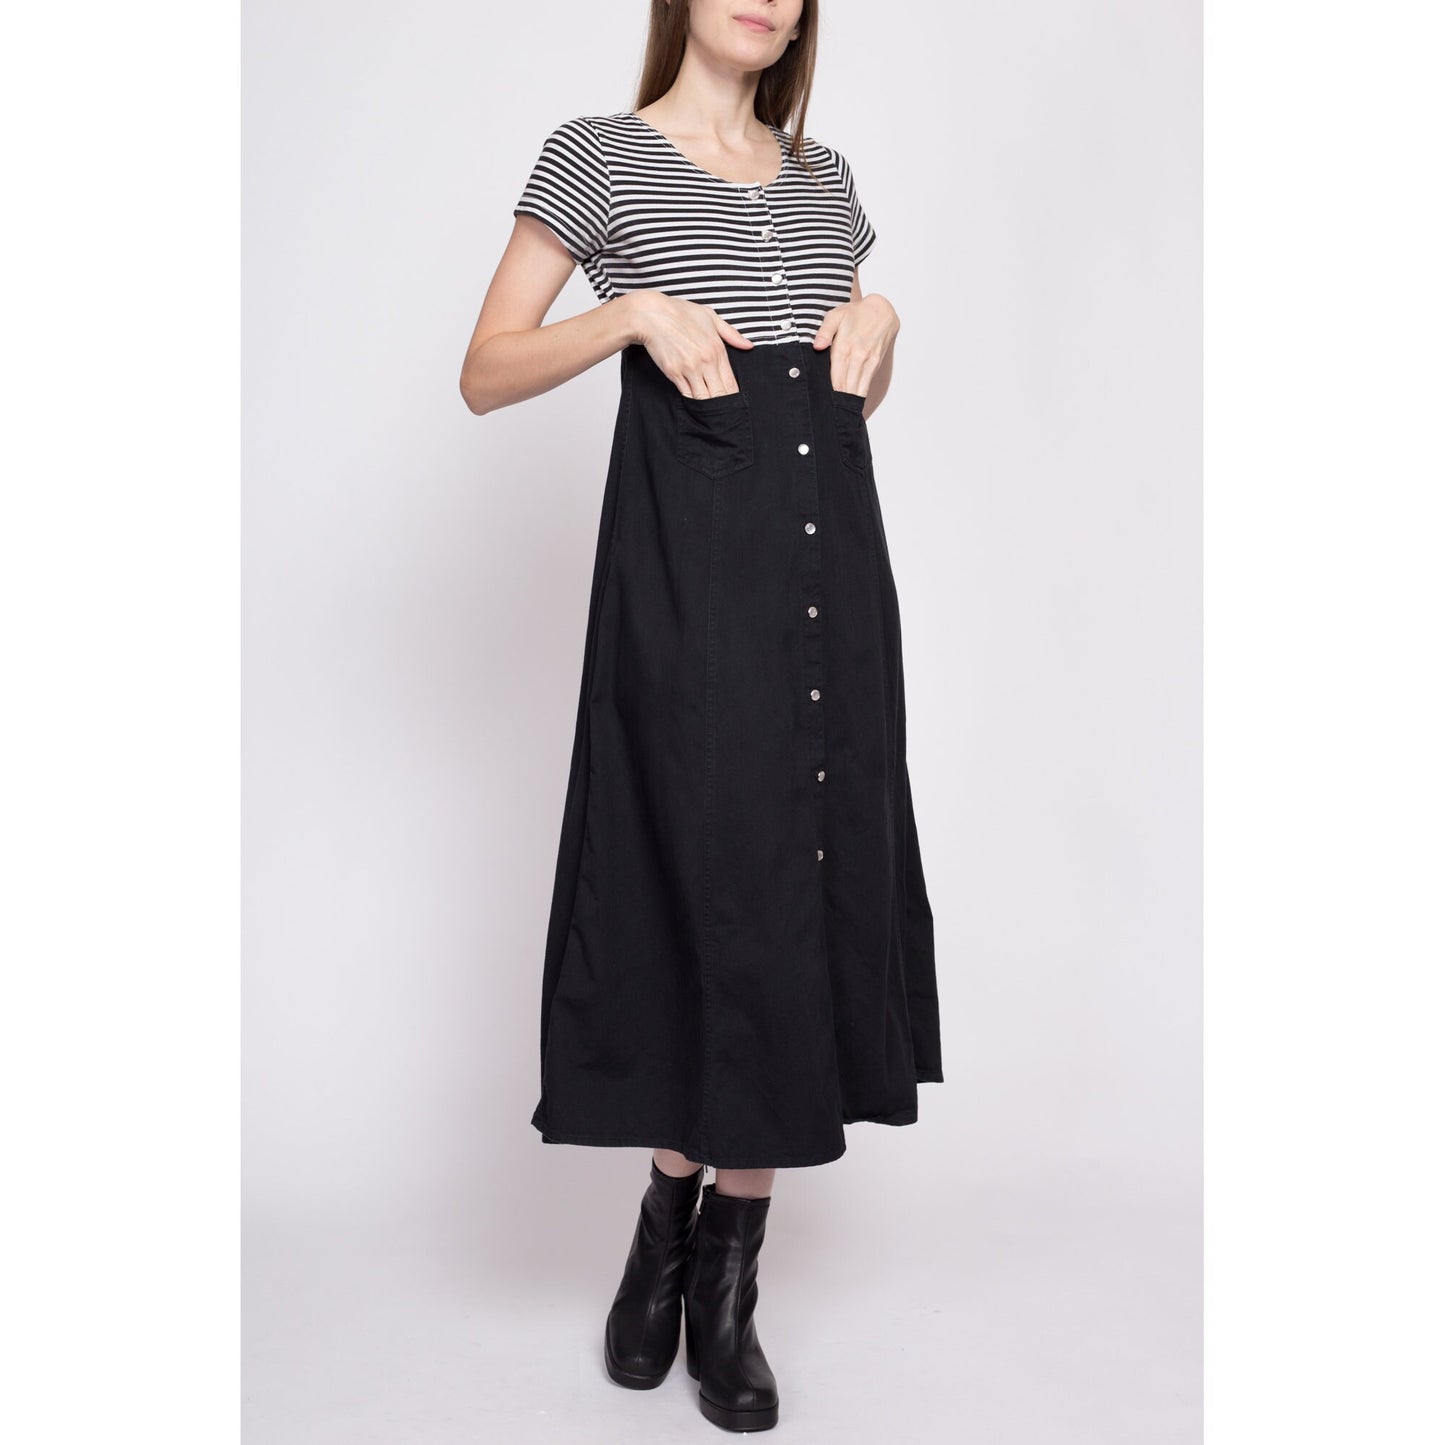 90s Grunge Two Tone Striped Midi Dress - Small | Vintage Button Front A Line Black & White Pocket Dress